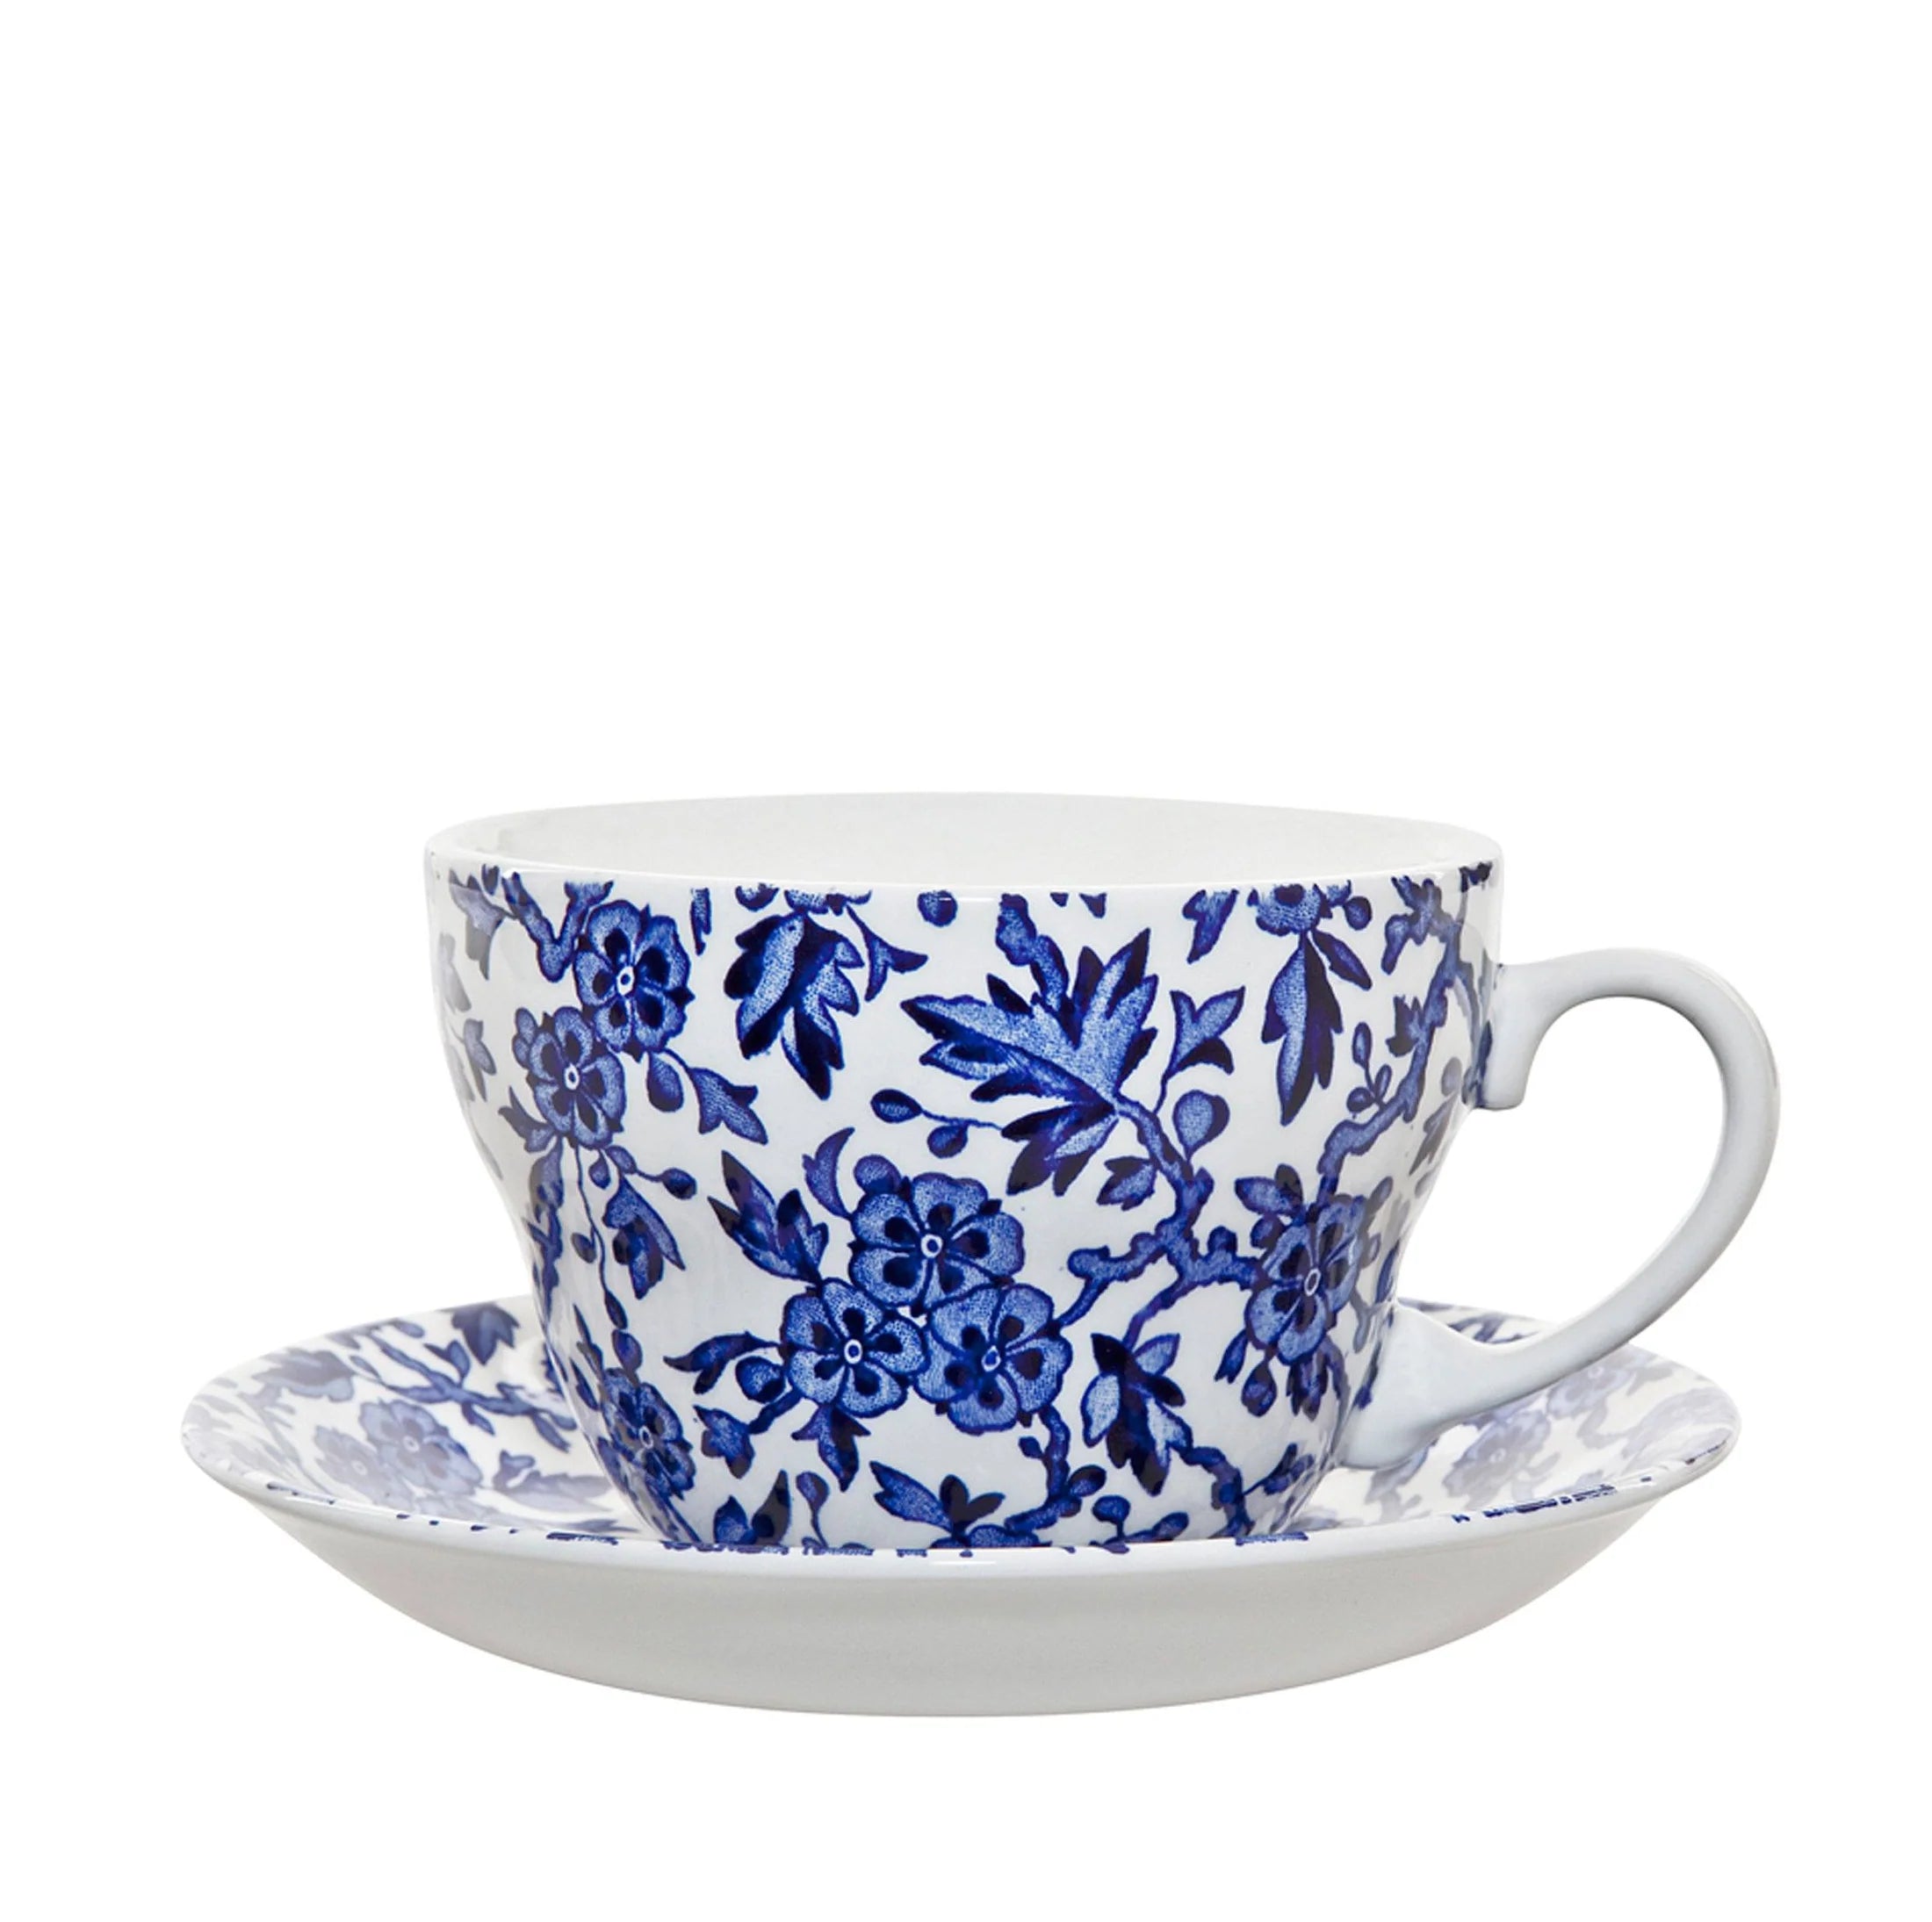 Breakfast cup & saucer 8.5 oz Large Cups | Bernardaud Porcelain